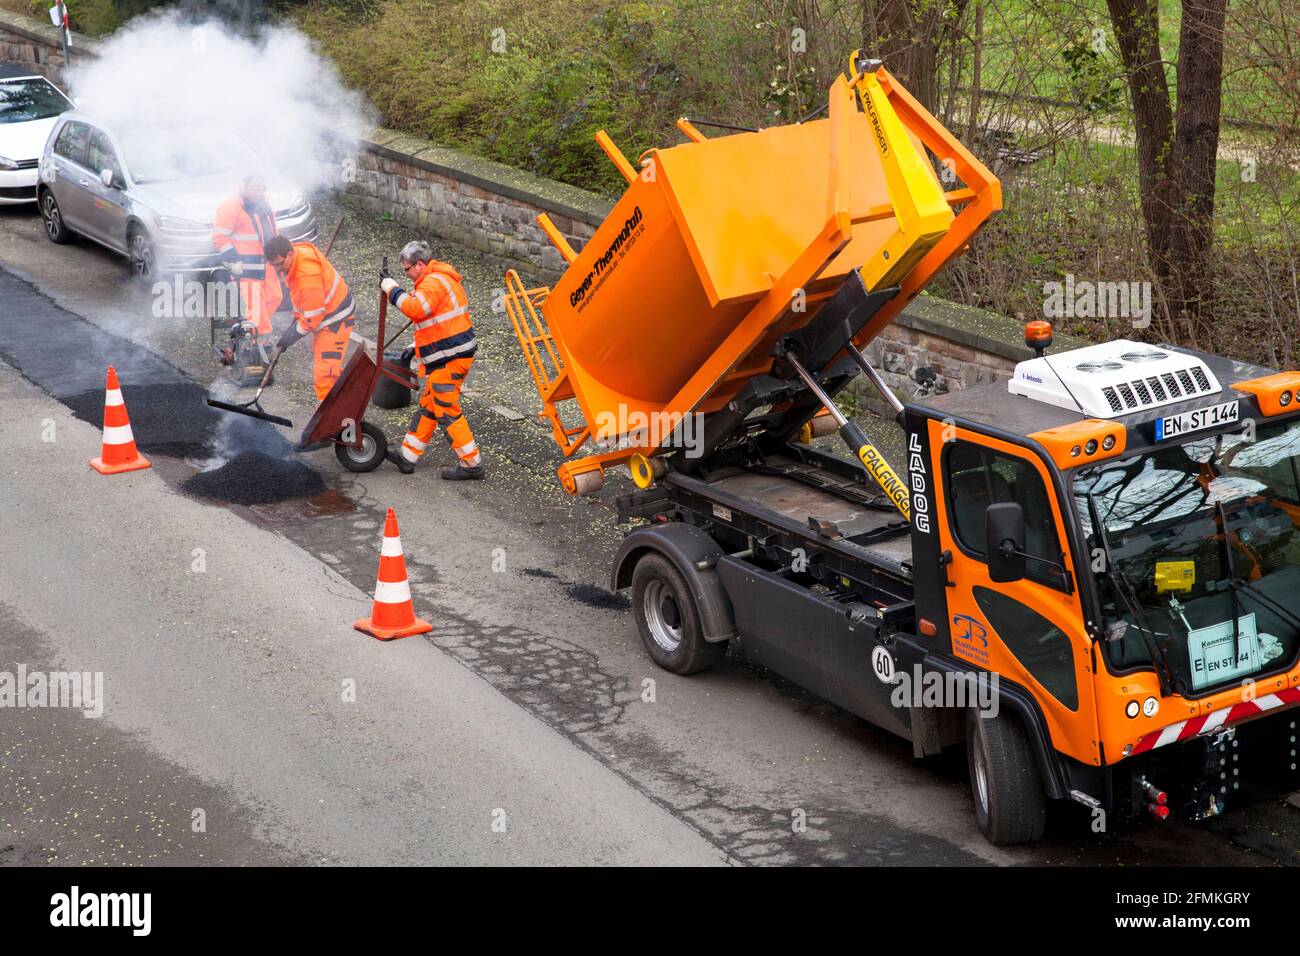 road repair works in the city of Wetter, filling of roadway damages with tar, North Rhine-Westphalia, Germany.   Strassenausbesserungsarbeiten in Wett Stock Photo